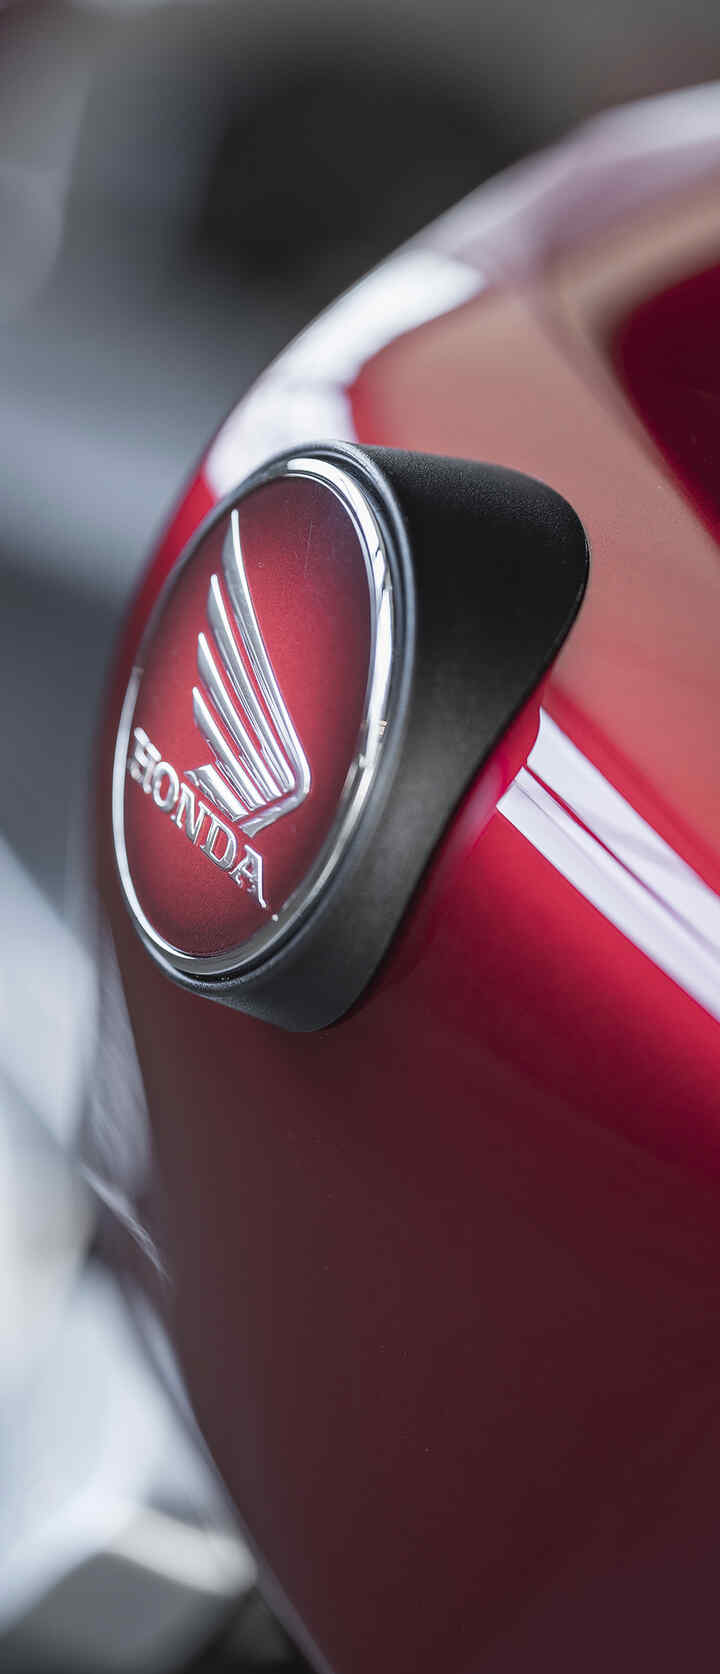 Honda motorcycle fuel tank with wings logo